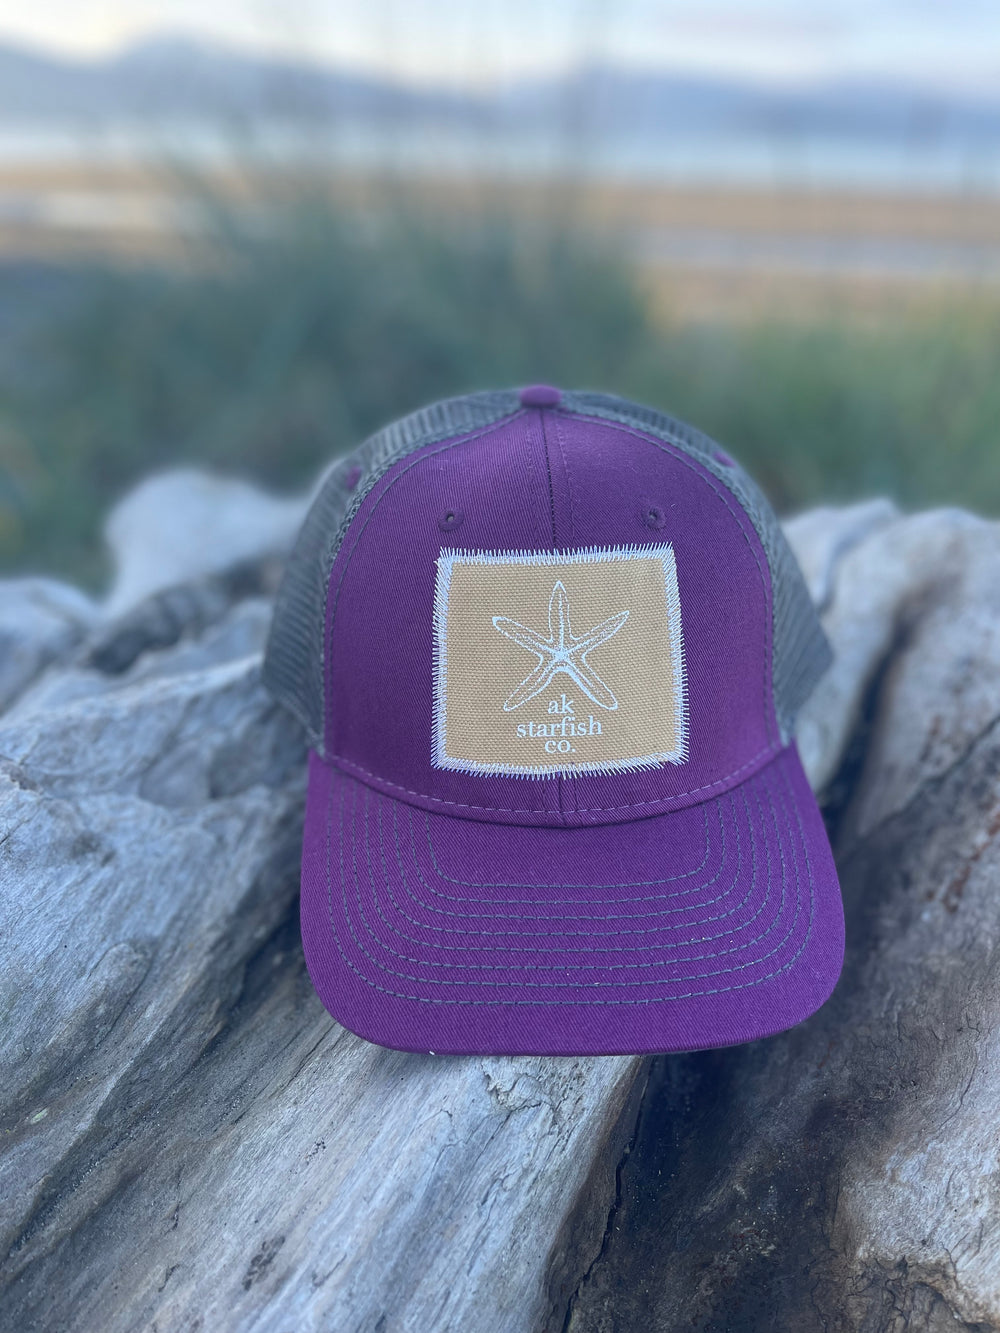 Violet / Slate AK Starfish Co. Patch Hat. $38.00